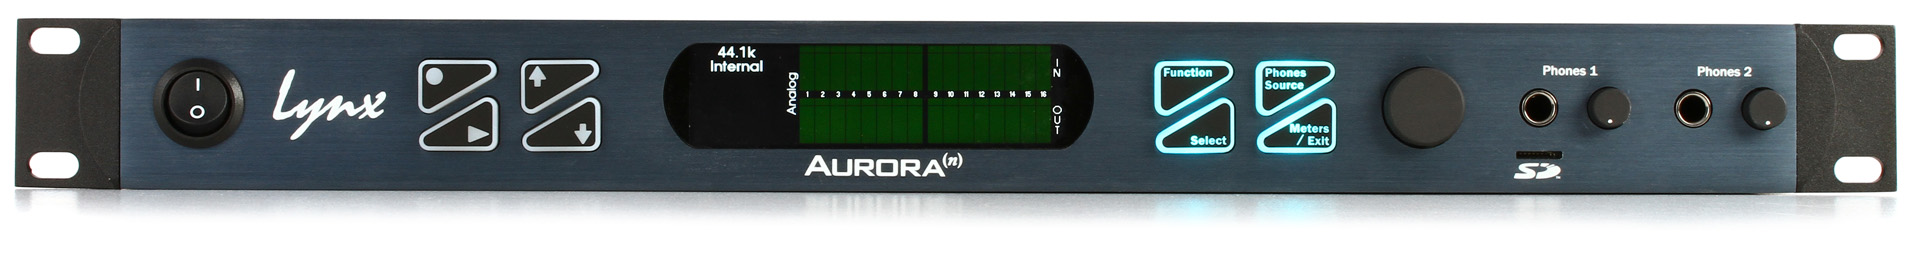 Lynx-Aurora-n-32-TB3-32-channel-AD_DA-Converter-with-Thunderbolt-3-Interface